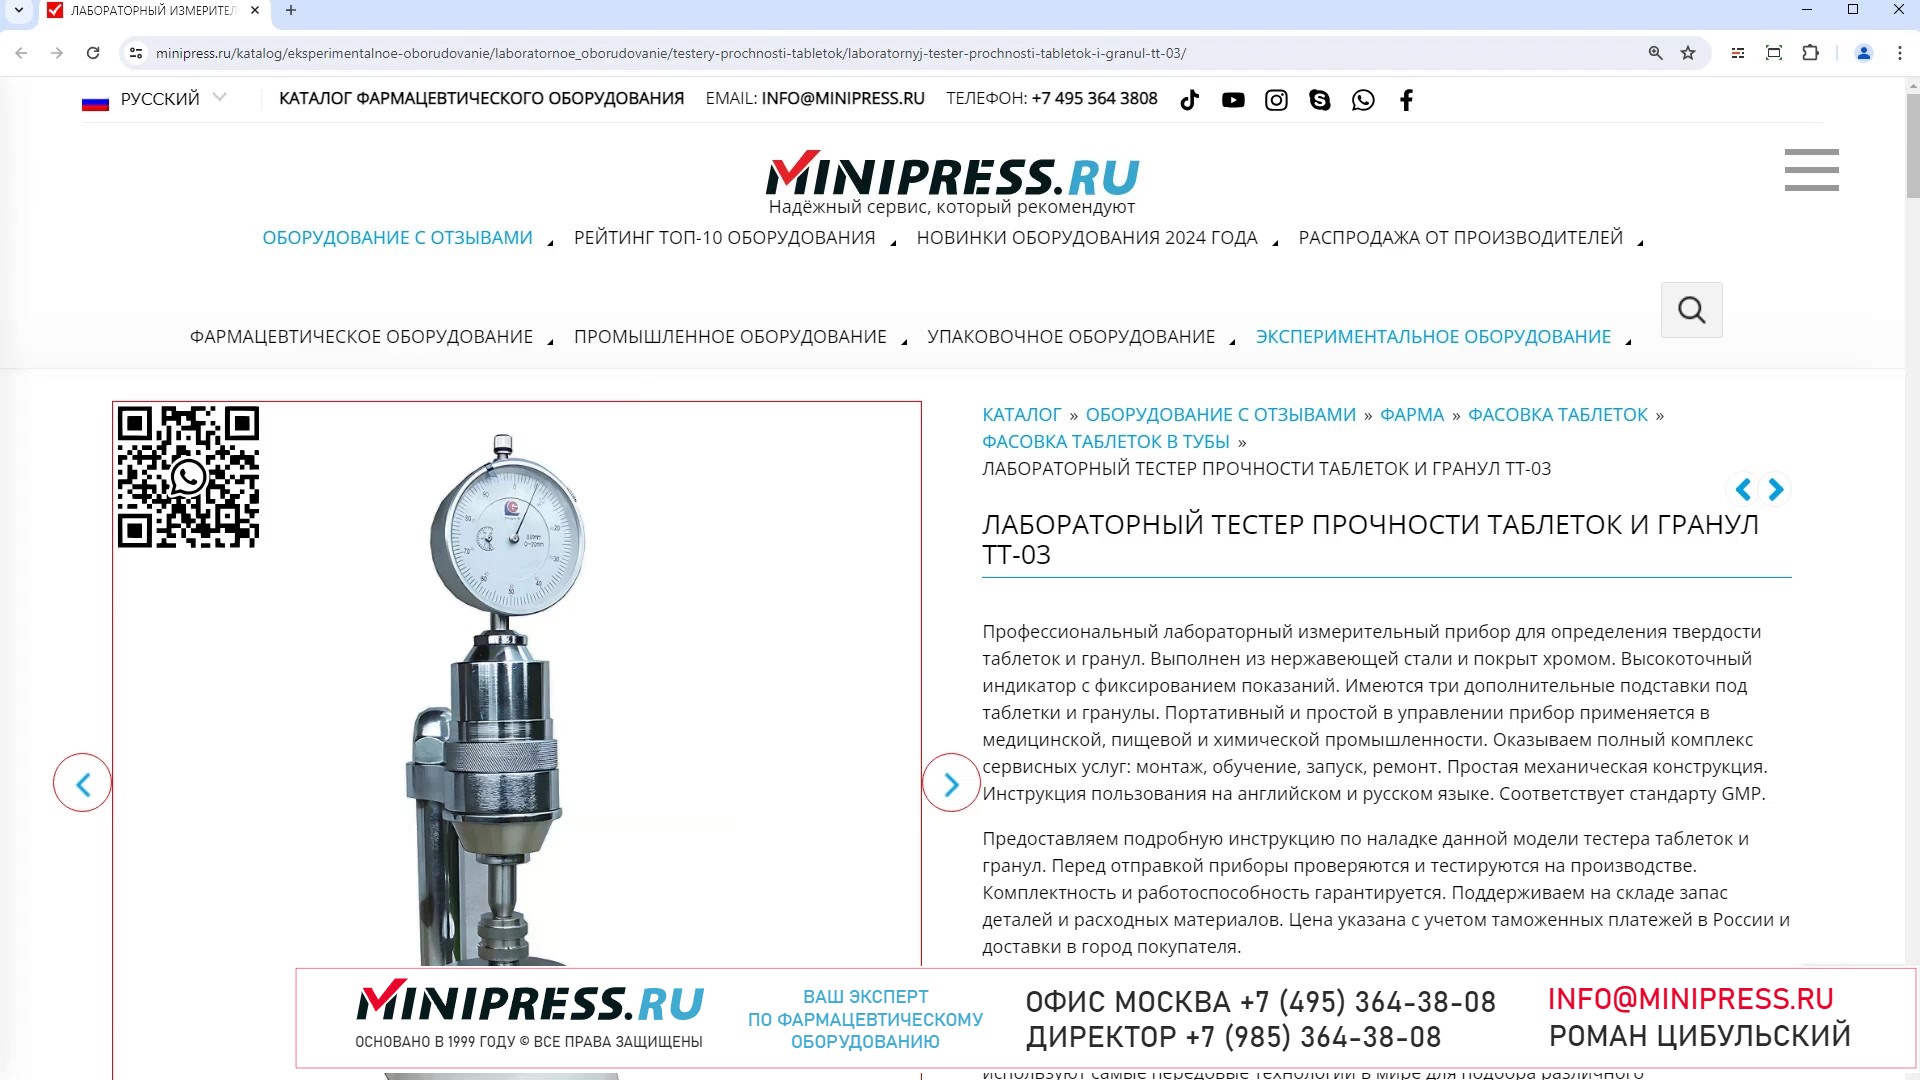 Minipress.ru Лабораторный тестер прочности таблеток и гранул TT-03